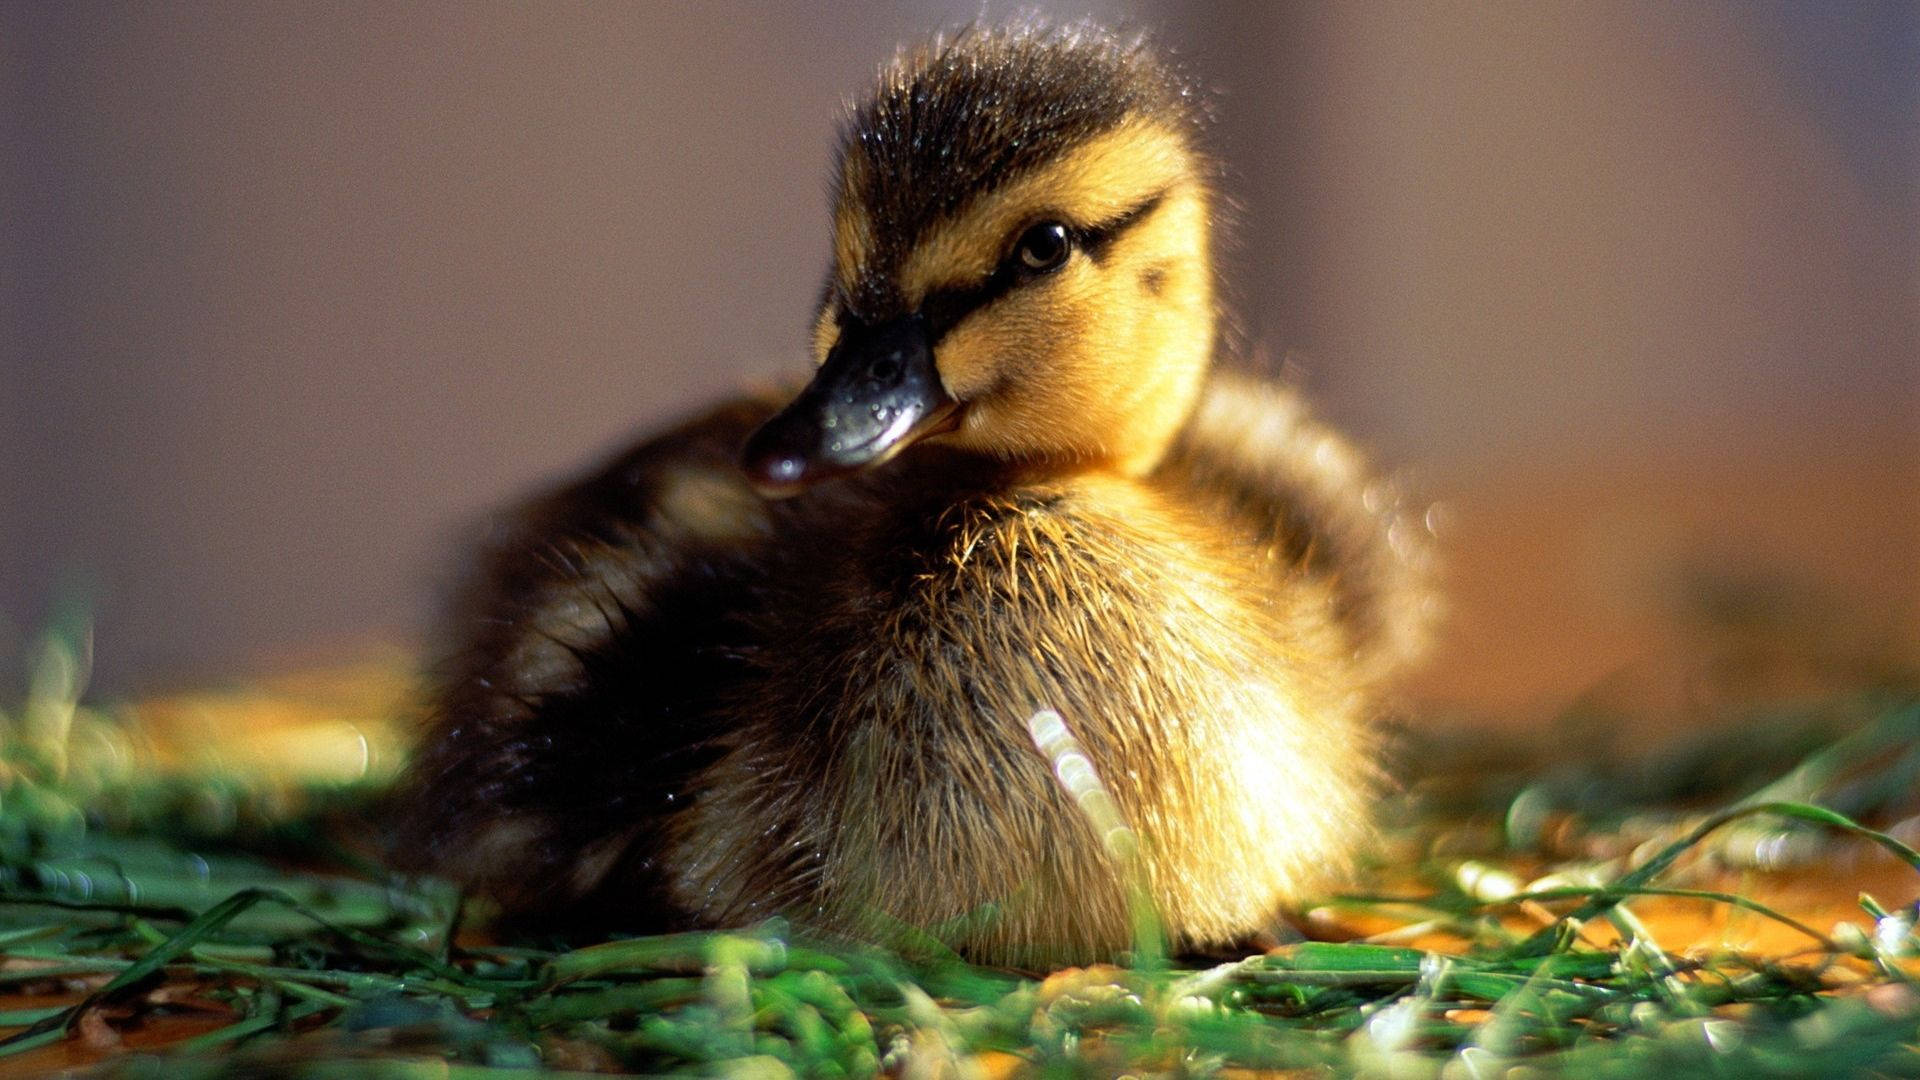 Dainty Baby Duck